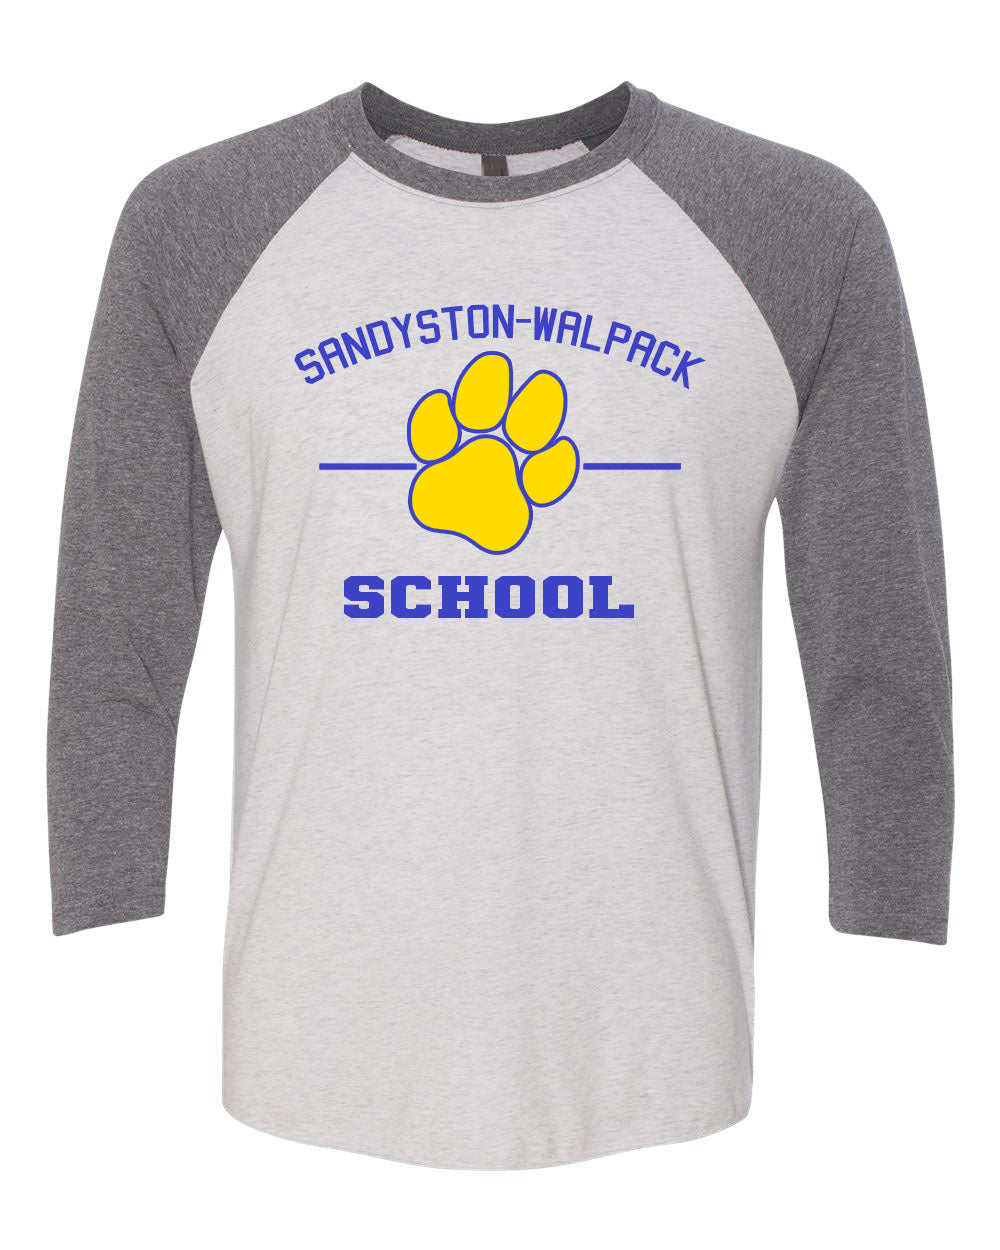 Sandyston Walpack Design 4 raglan shirt